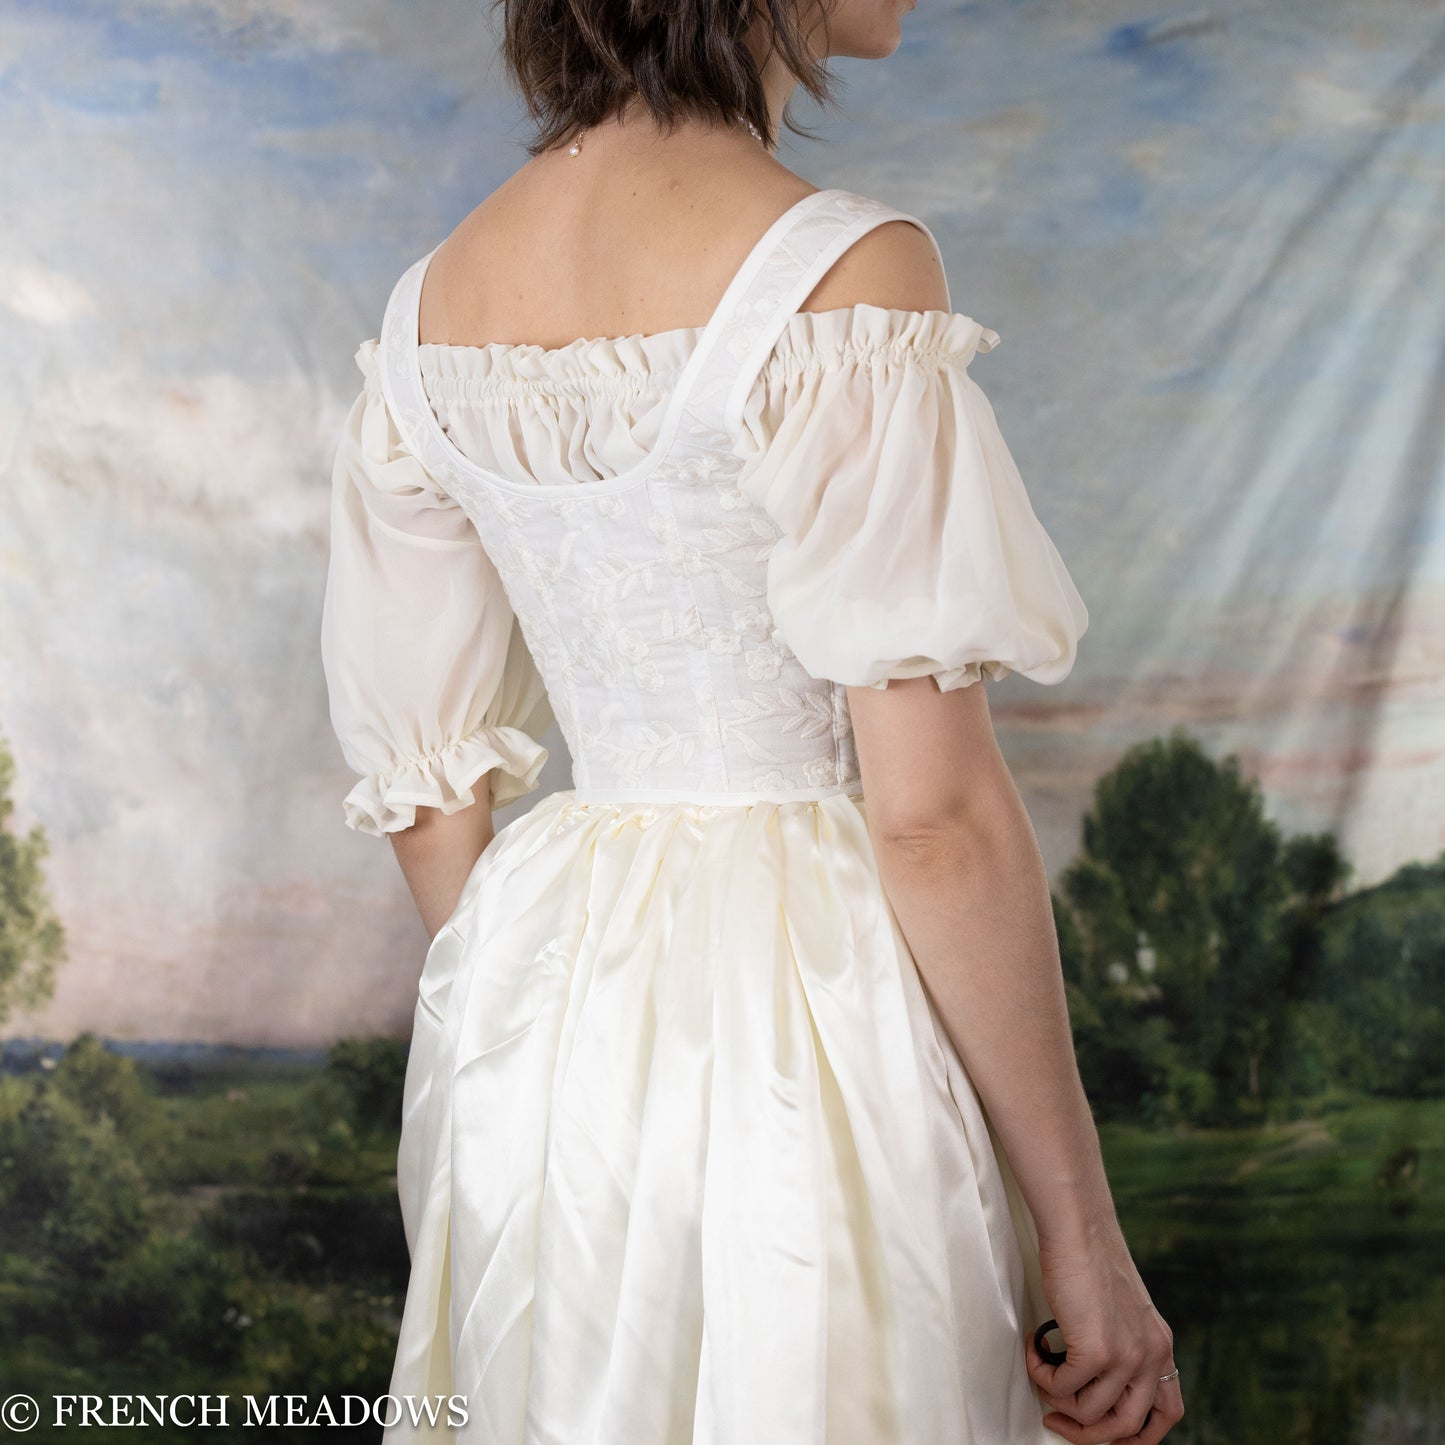 back view of model wearing a white corset wedding dress